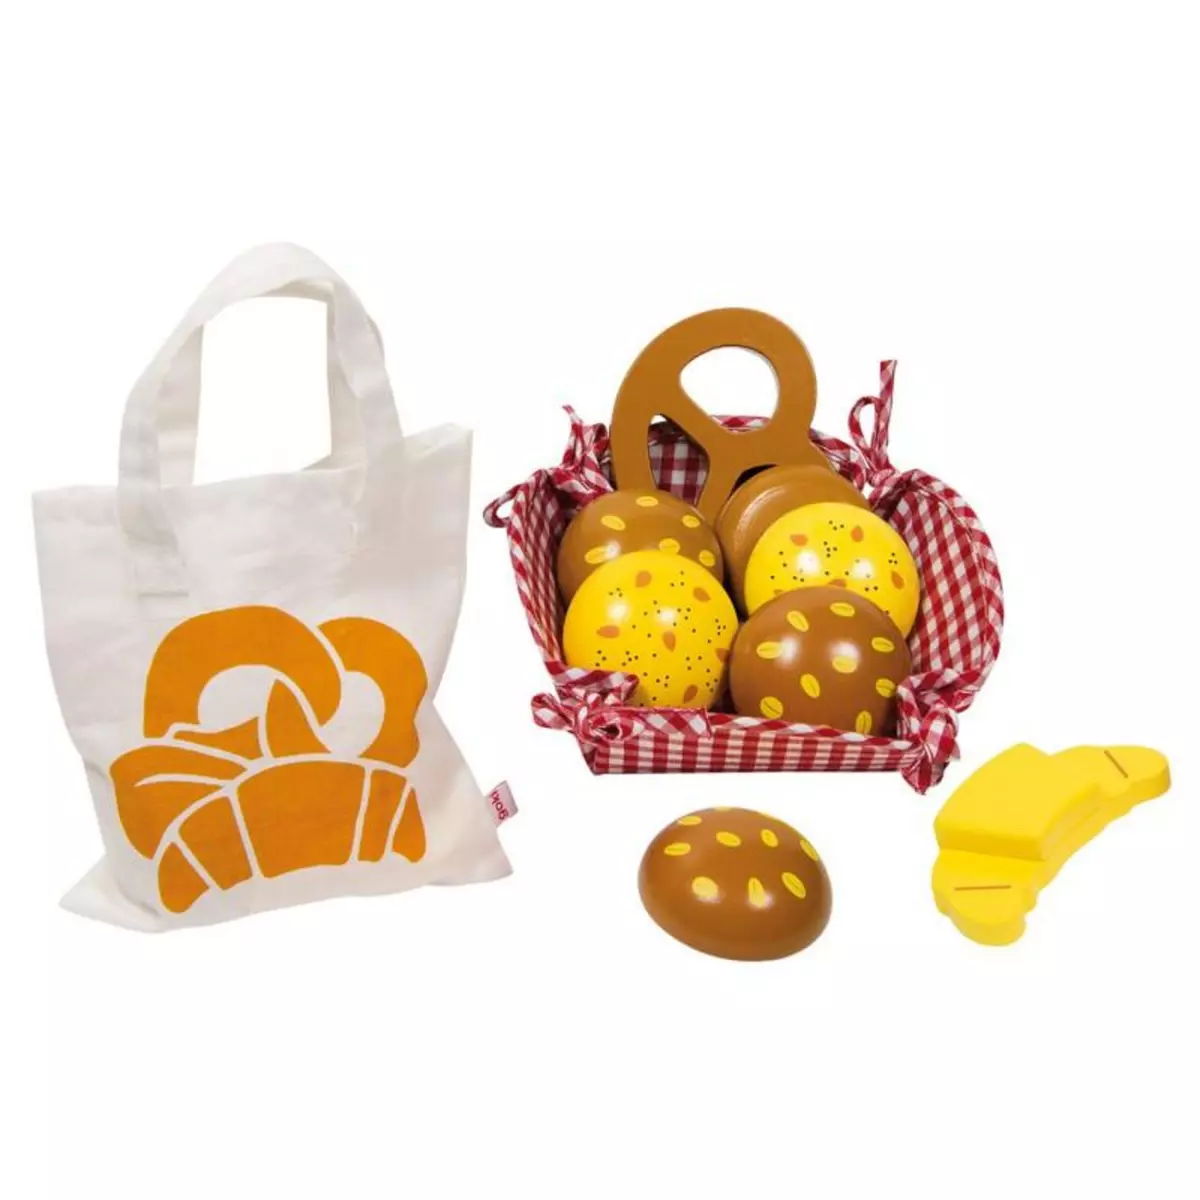 Goki GOKI Breakfast Basket/picnic set with wooden Bread